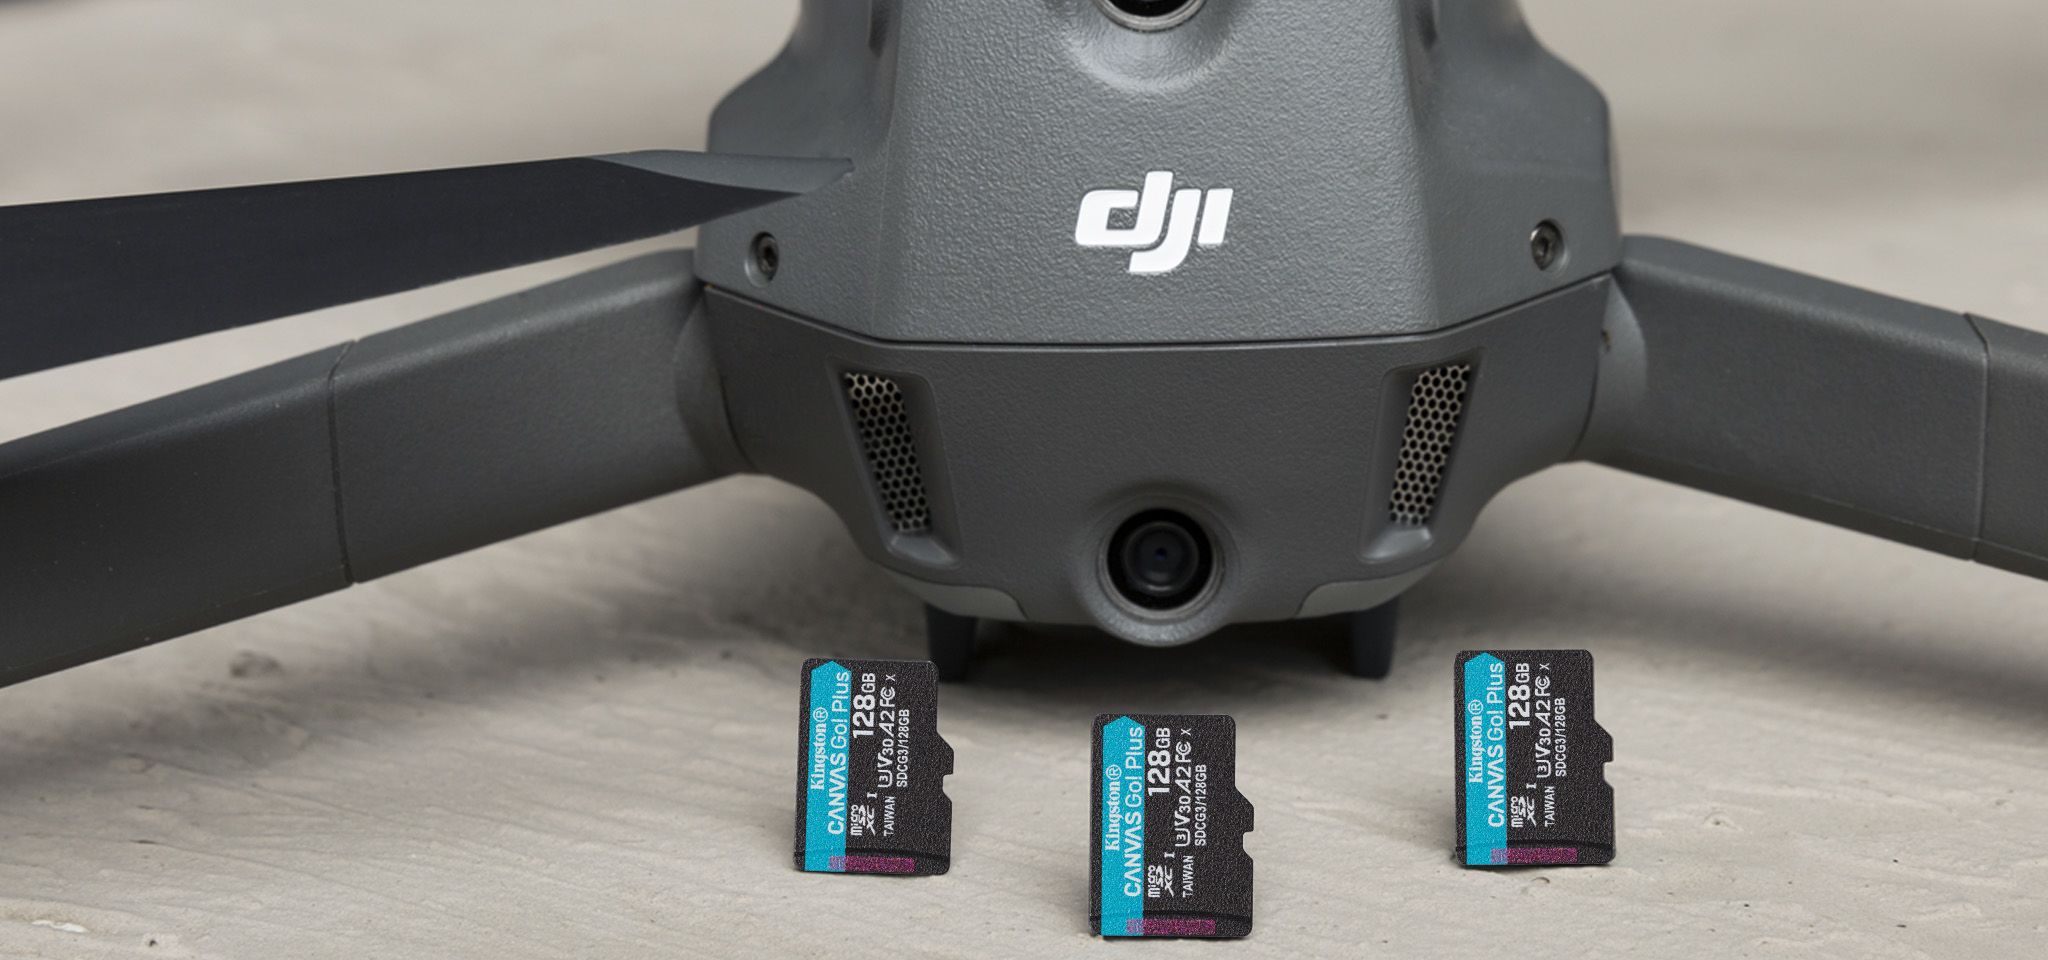 Kartu microSD Kingston untuk drone